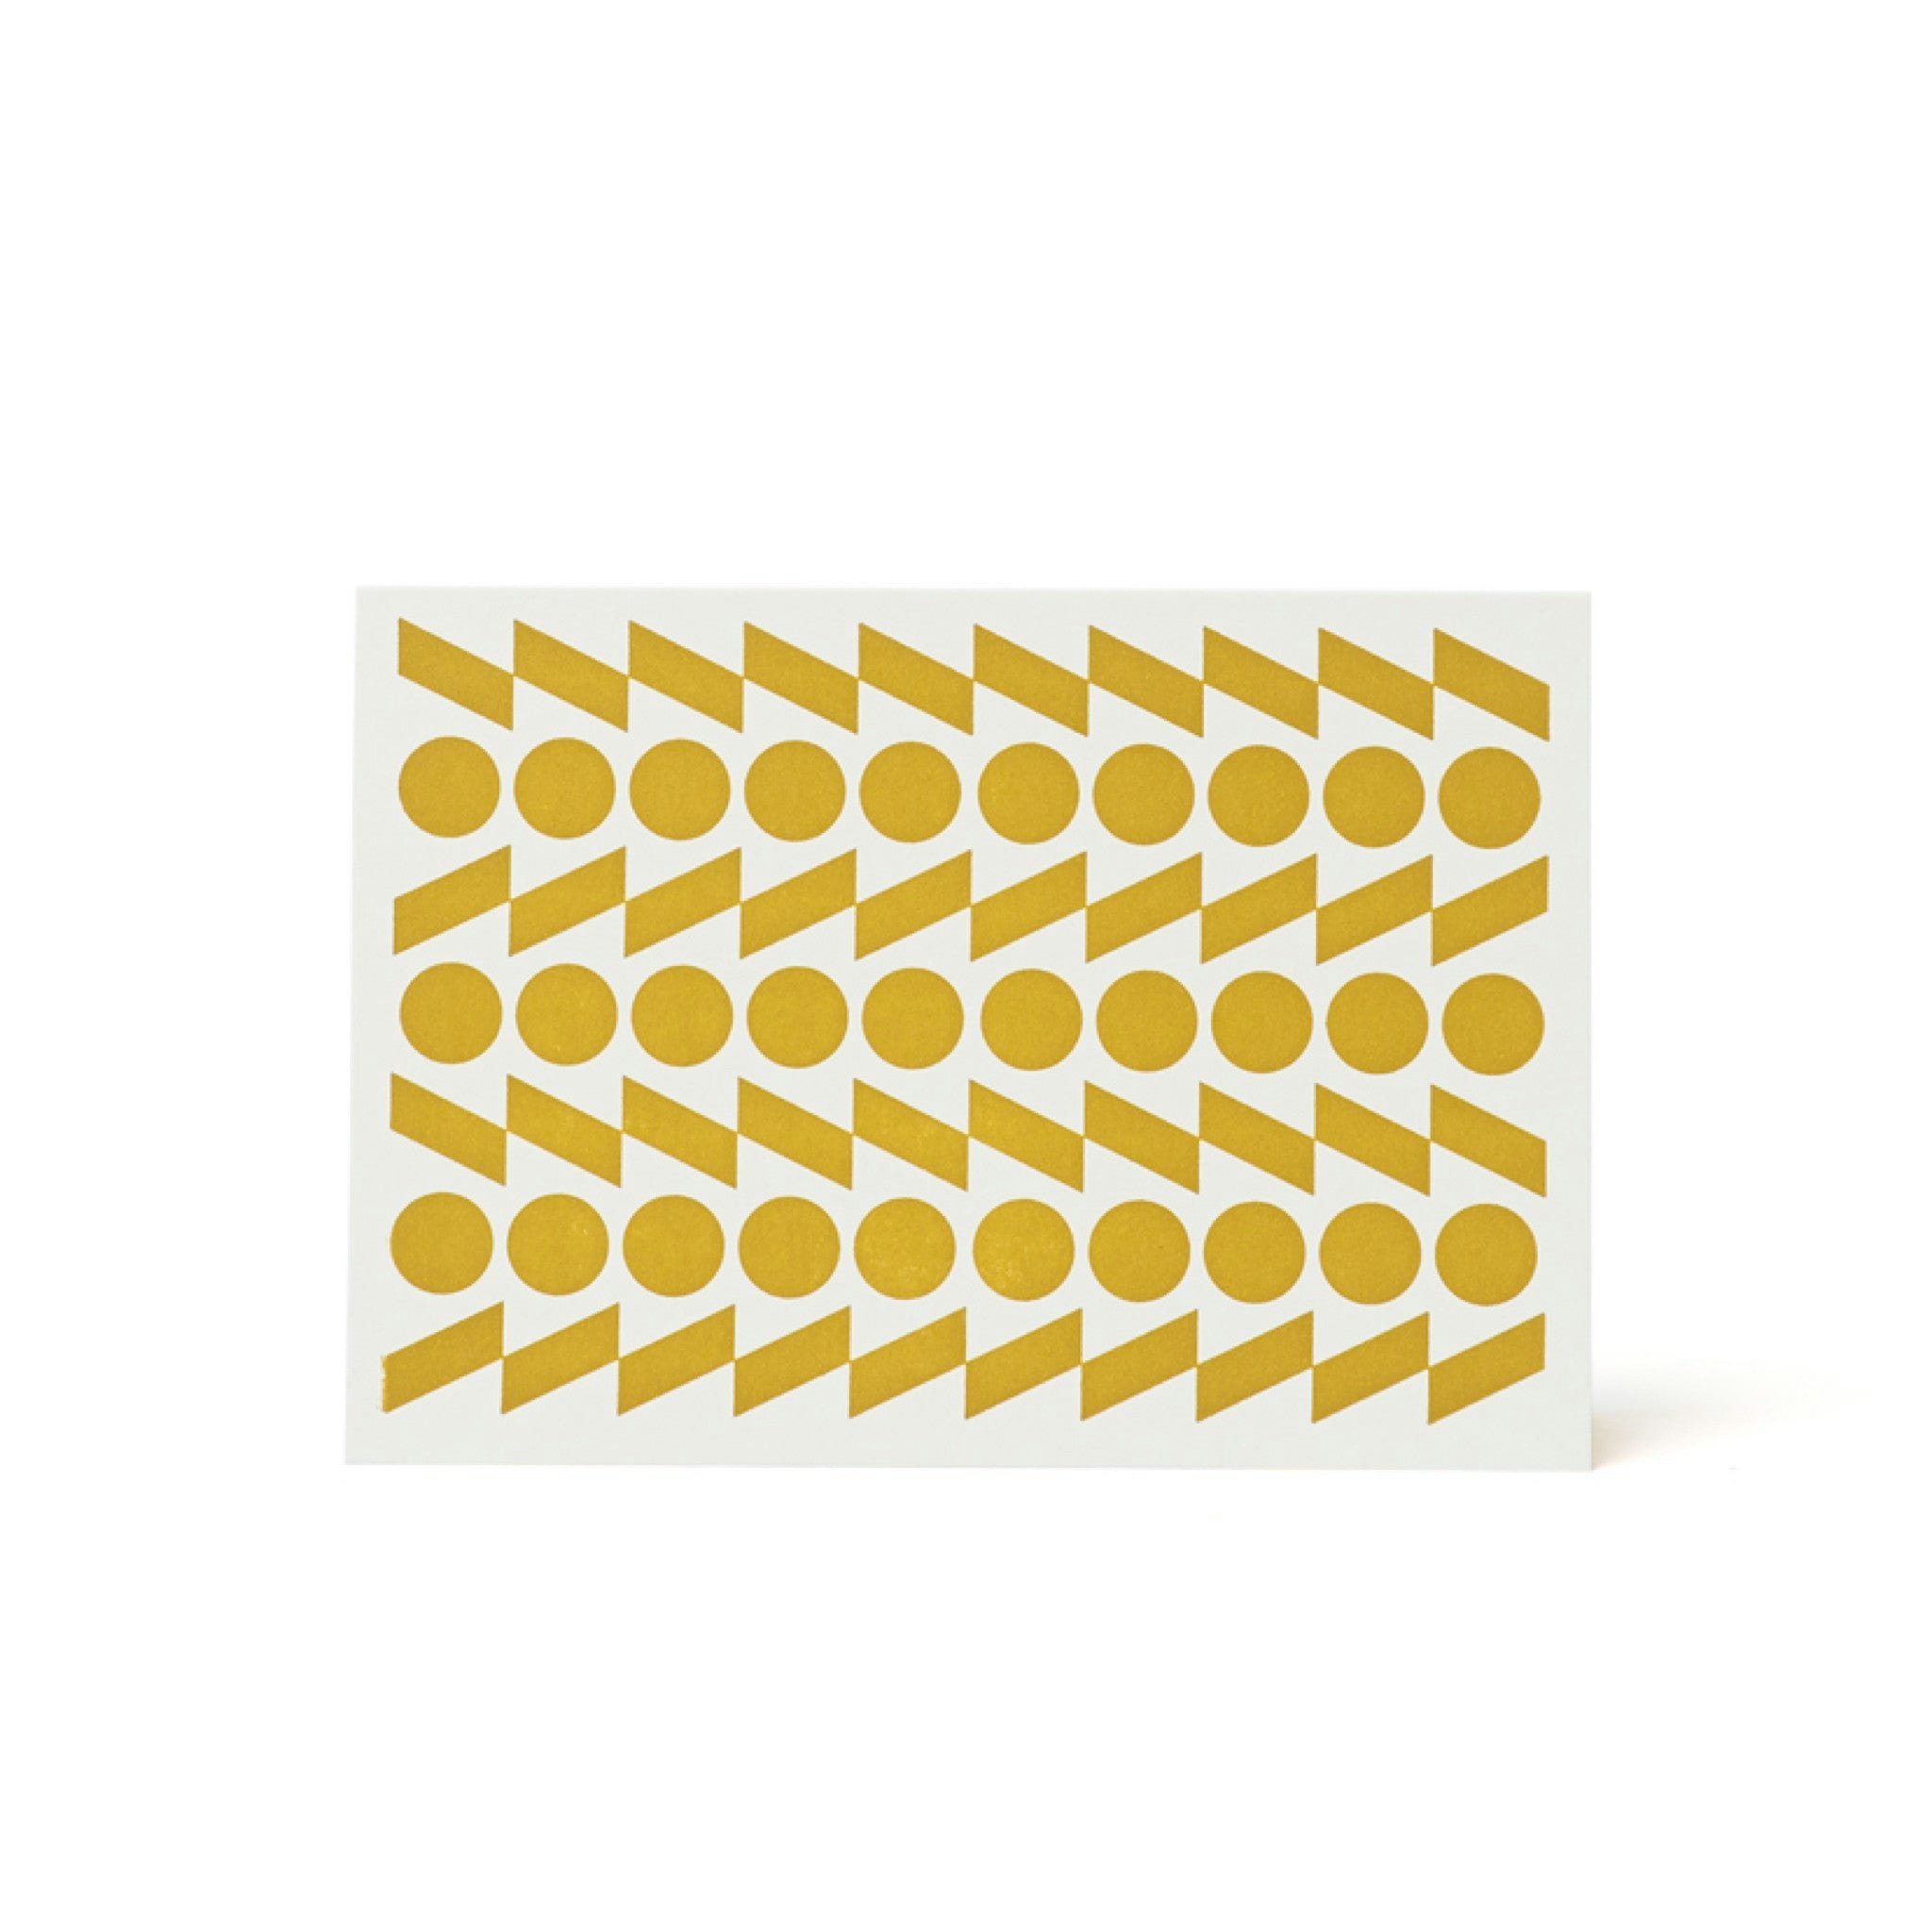 Rythym Letterpress Card - Yellow Ochre by Esme Winter